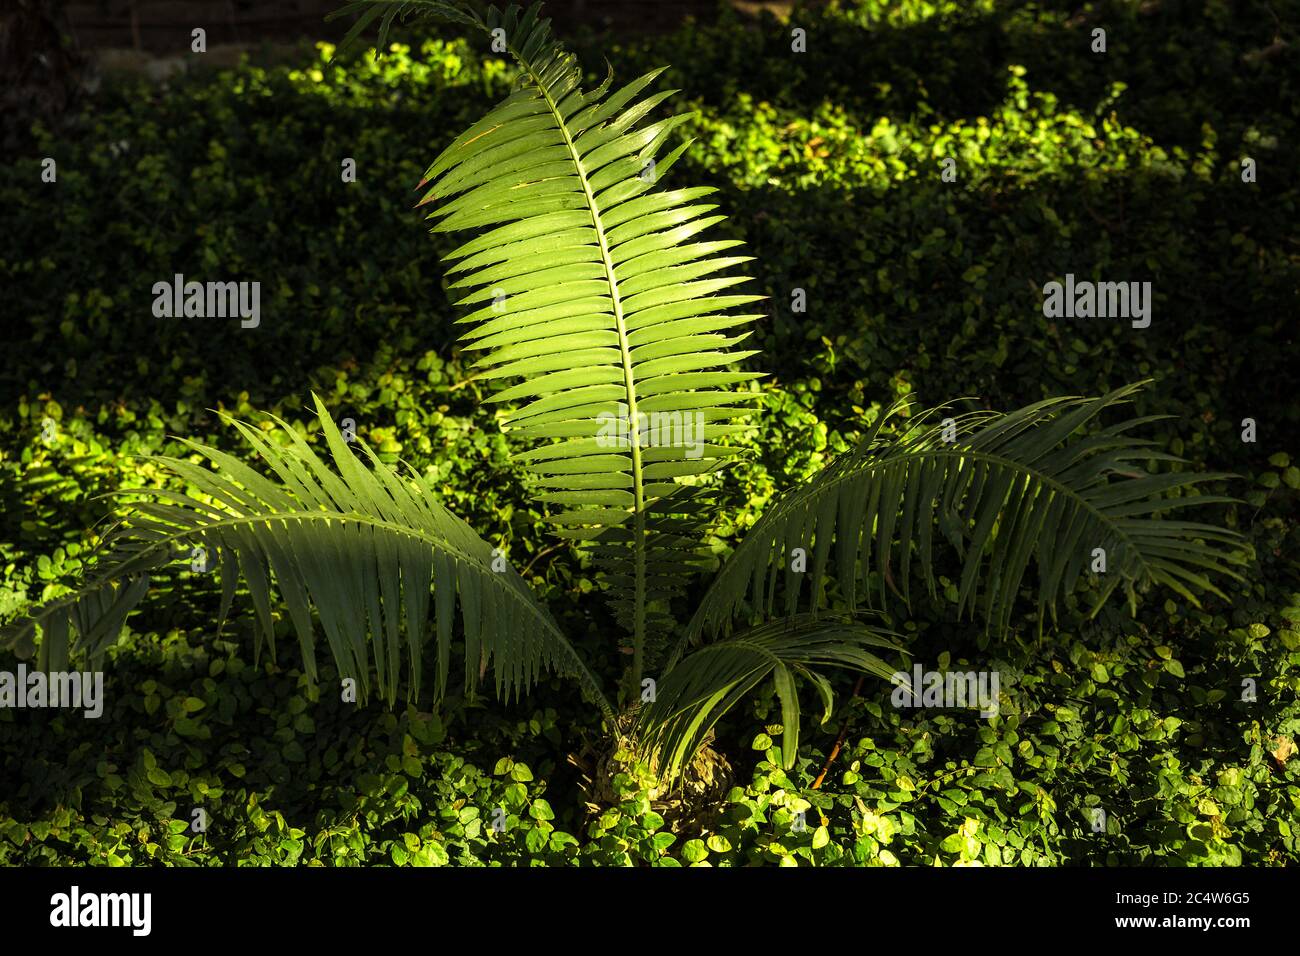 evergreen false palm tree of Japanese origin and small height Stock Photo